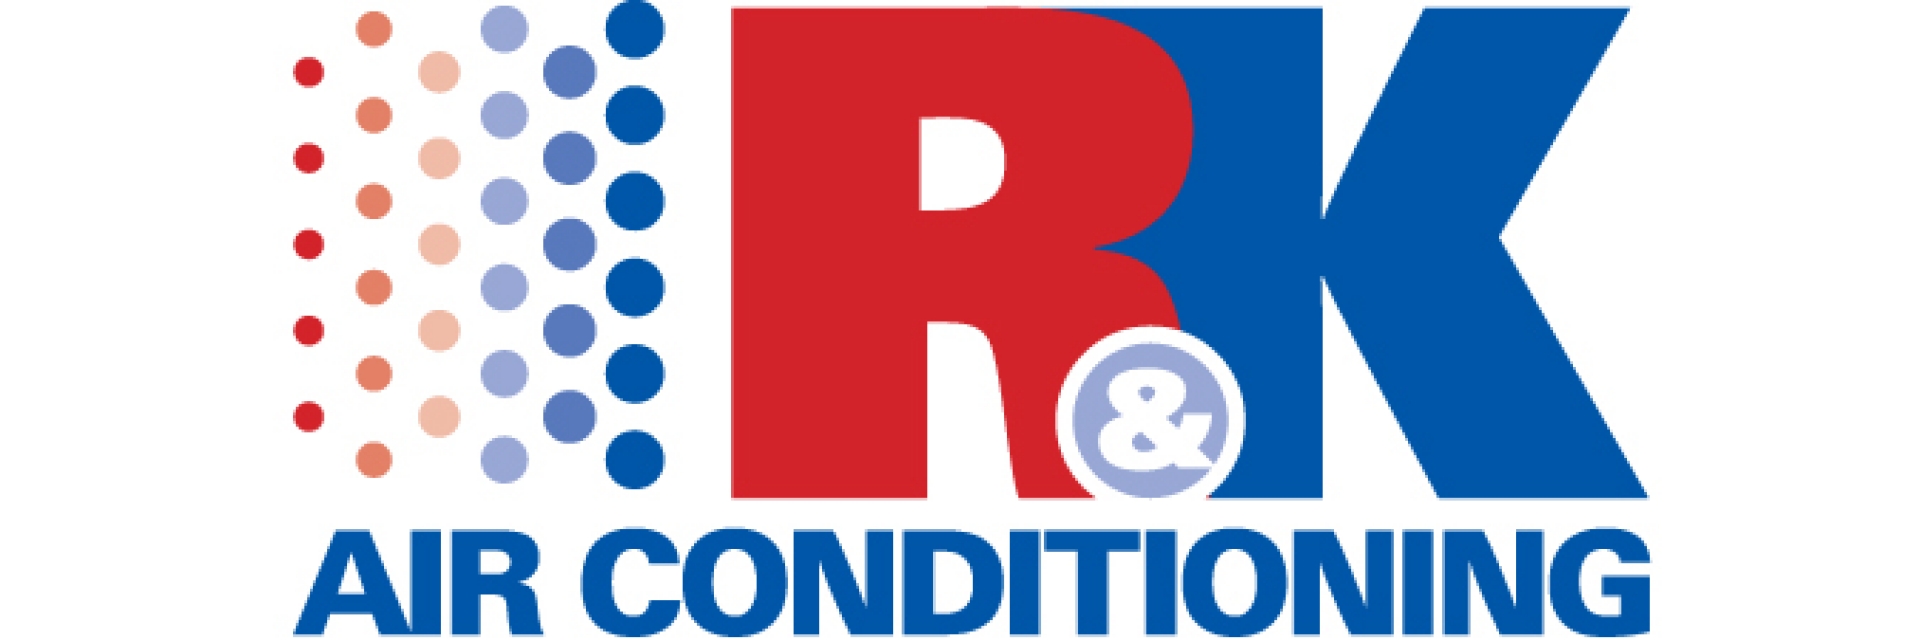 R & K Air Conditioning logo